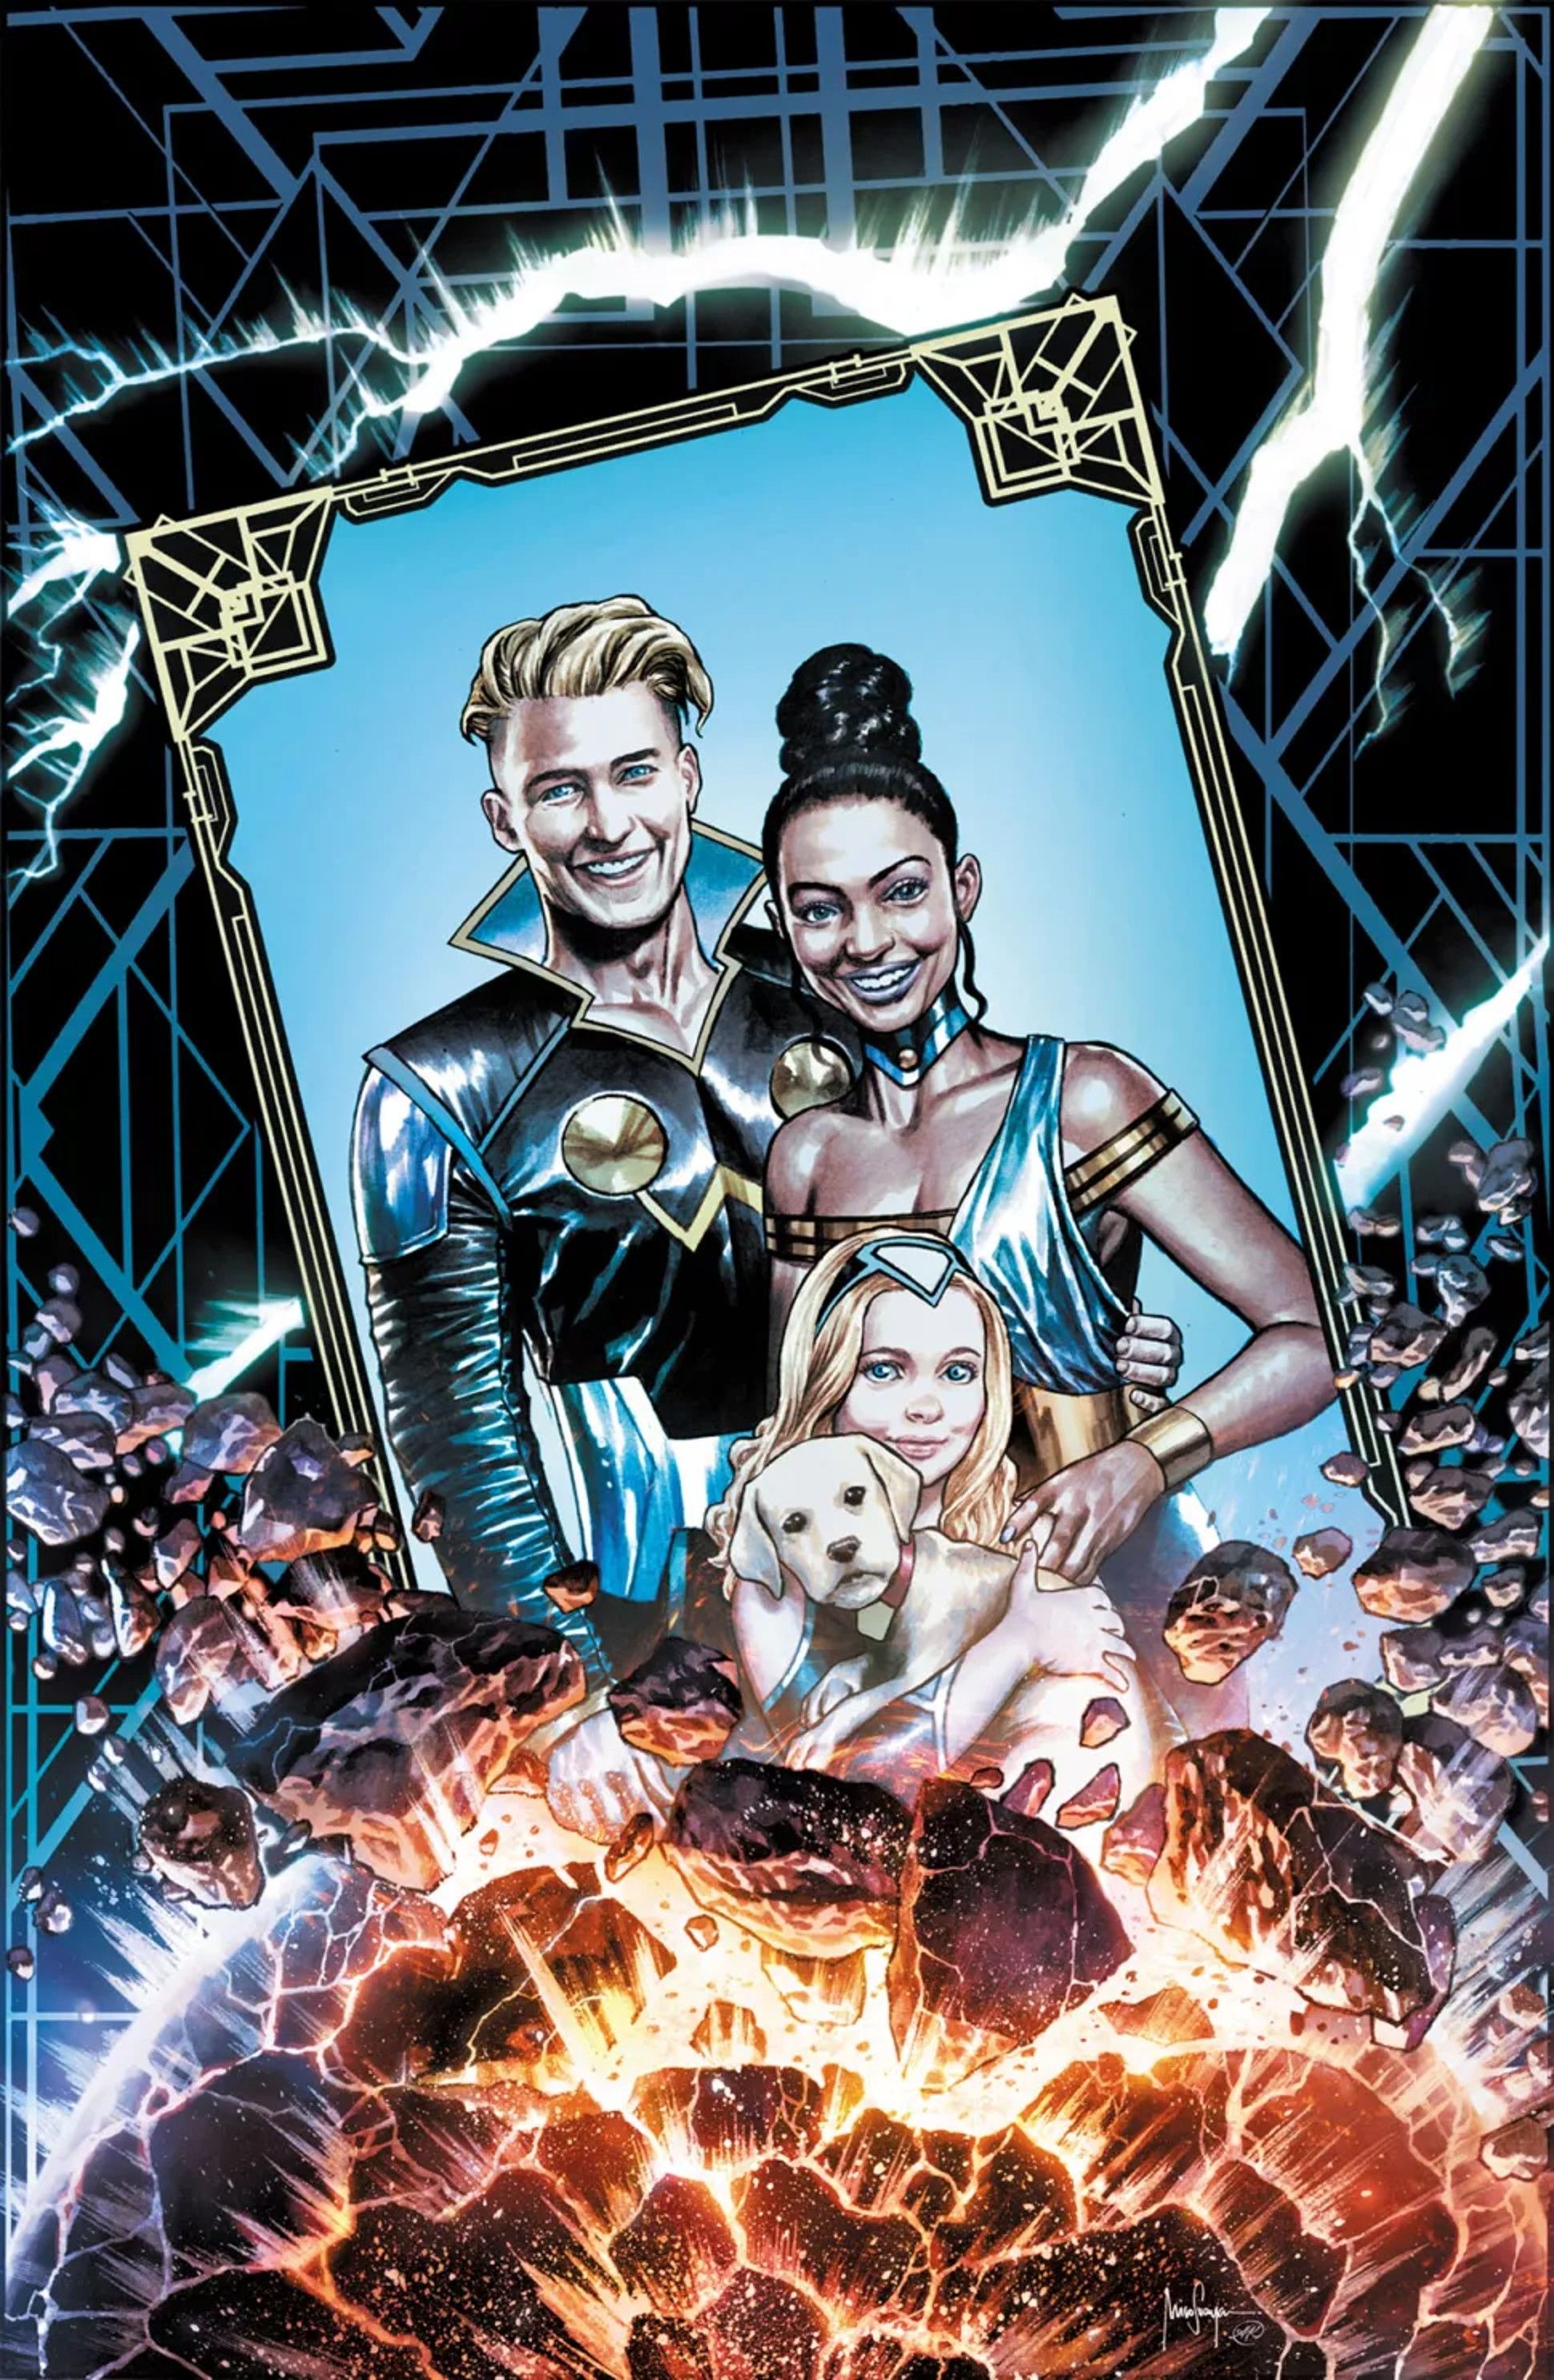 Kara-El and family portrait behind exploding Krypton.